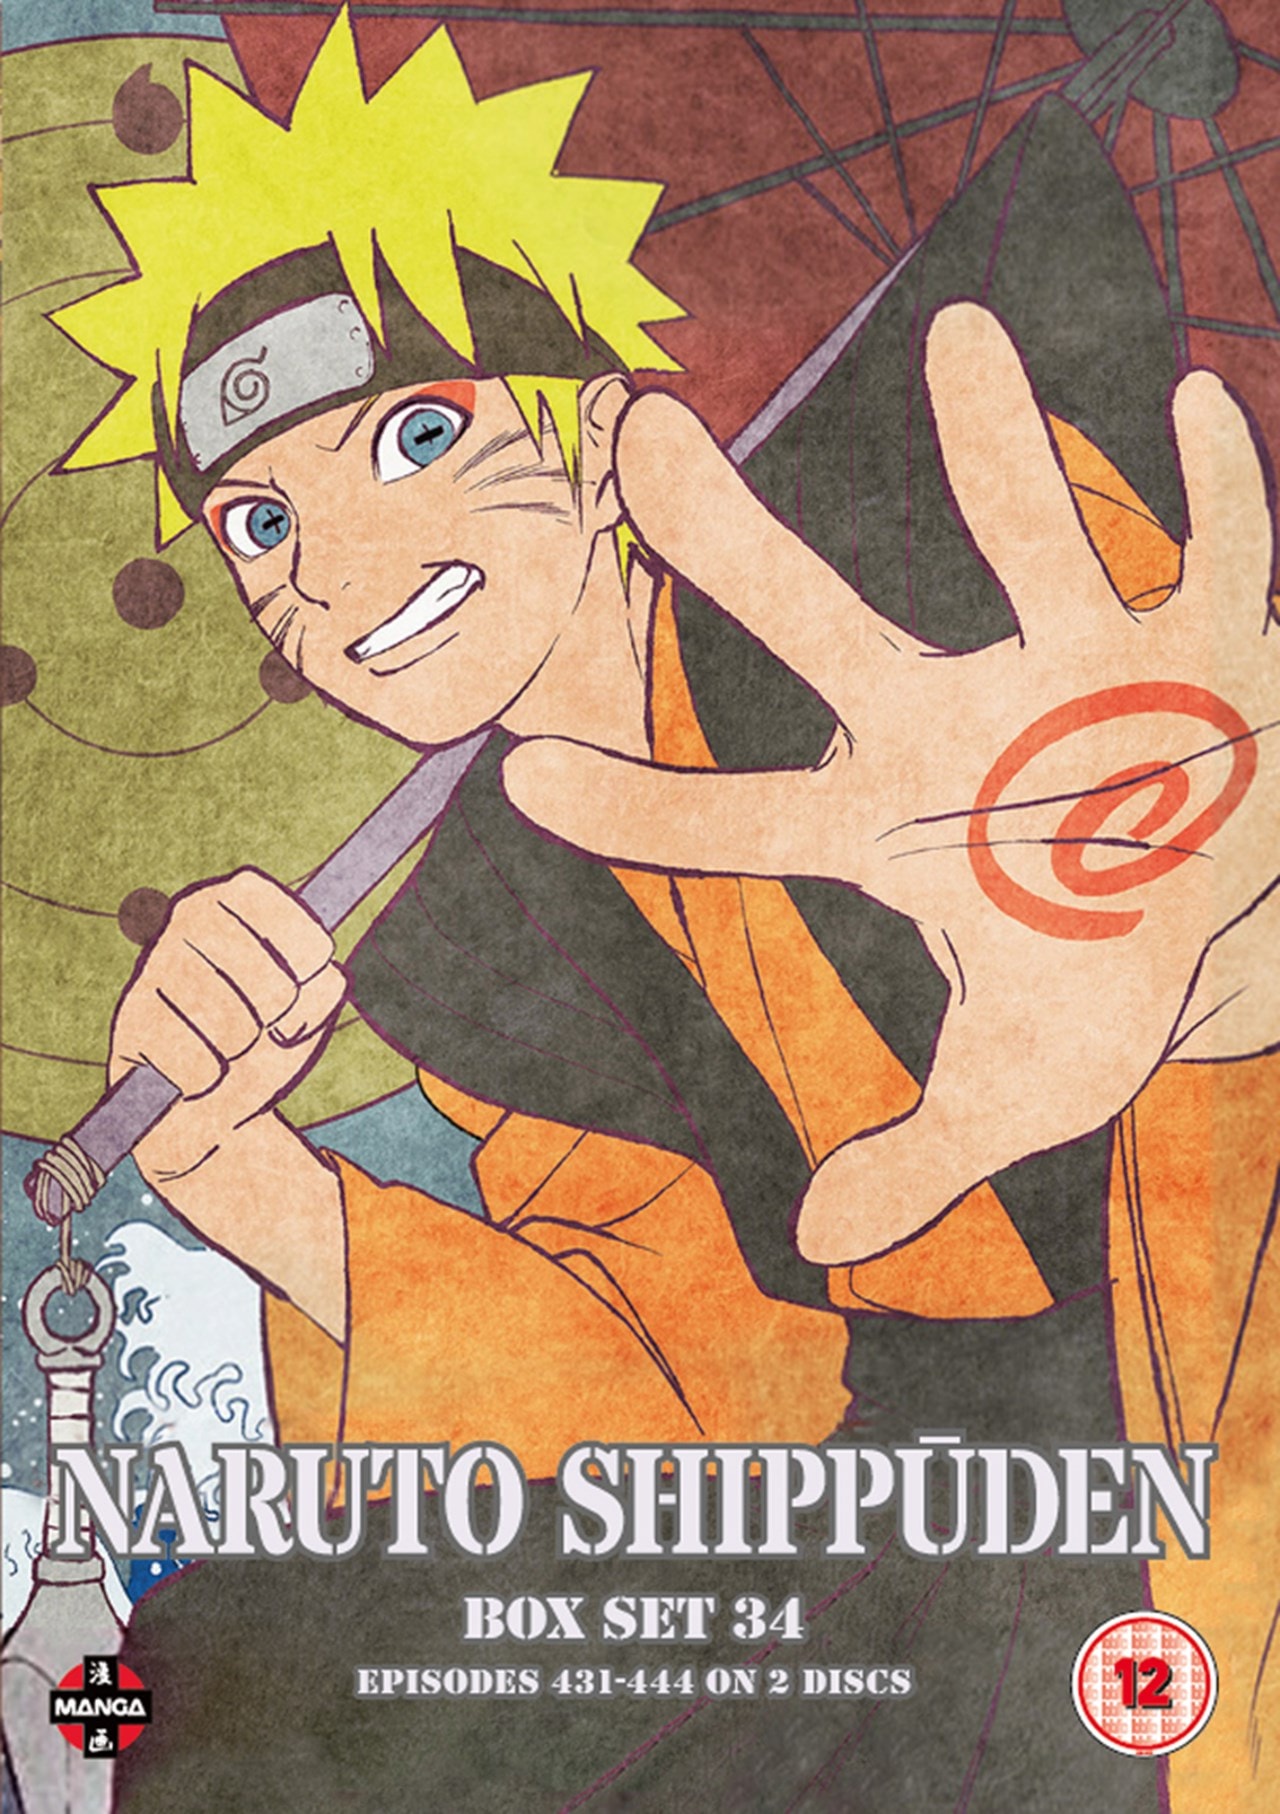 Naruto Shippuden Collection Volume 34 Dvd Box Set Free Shipping Over Hmv Store